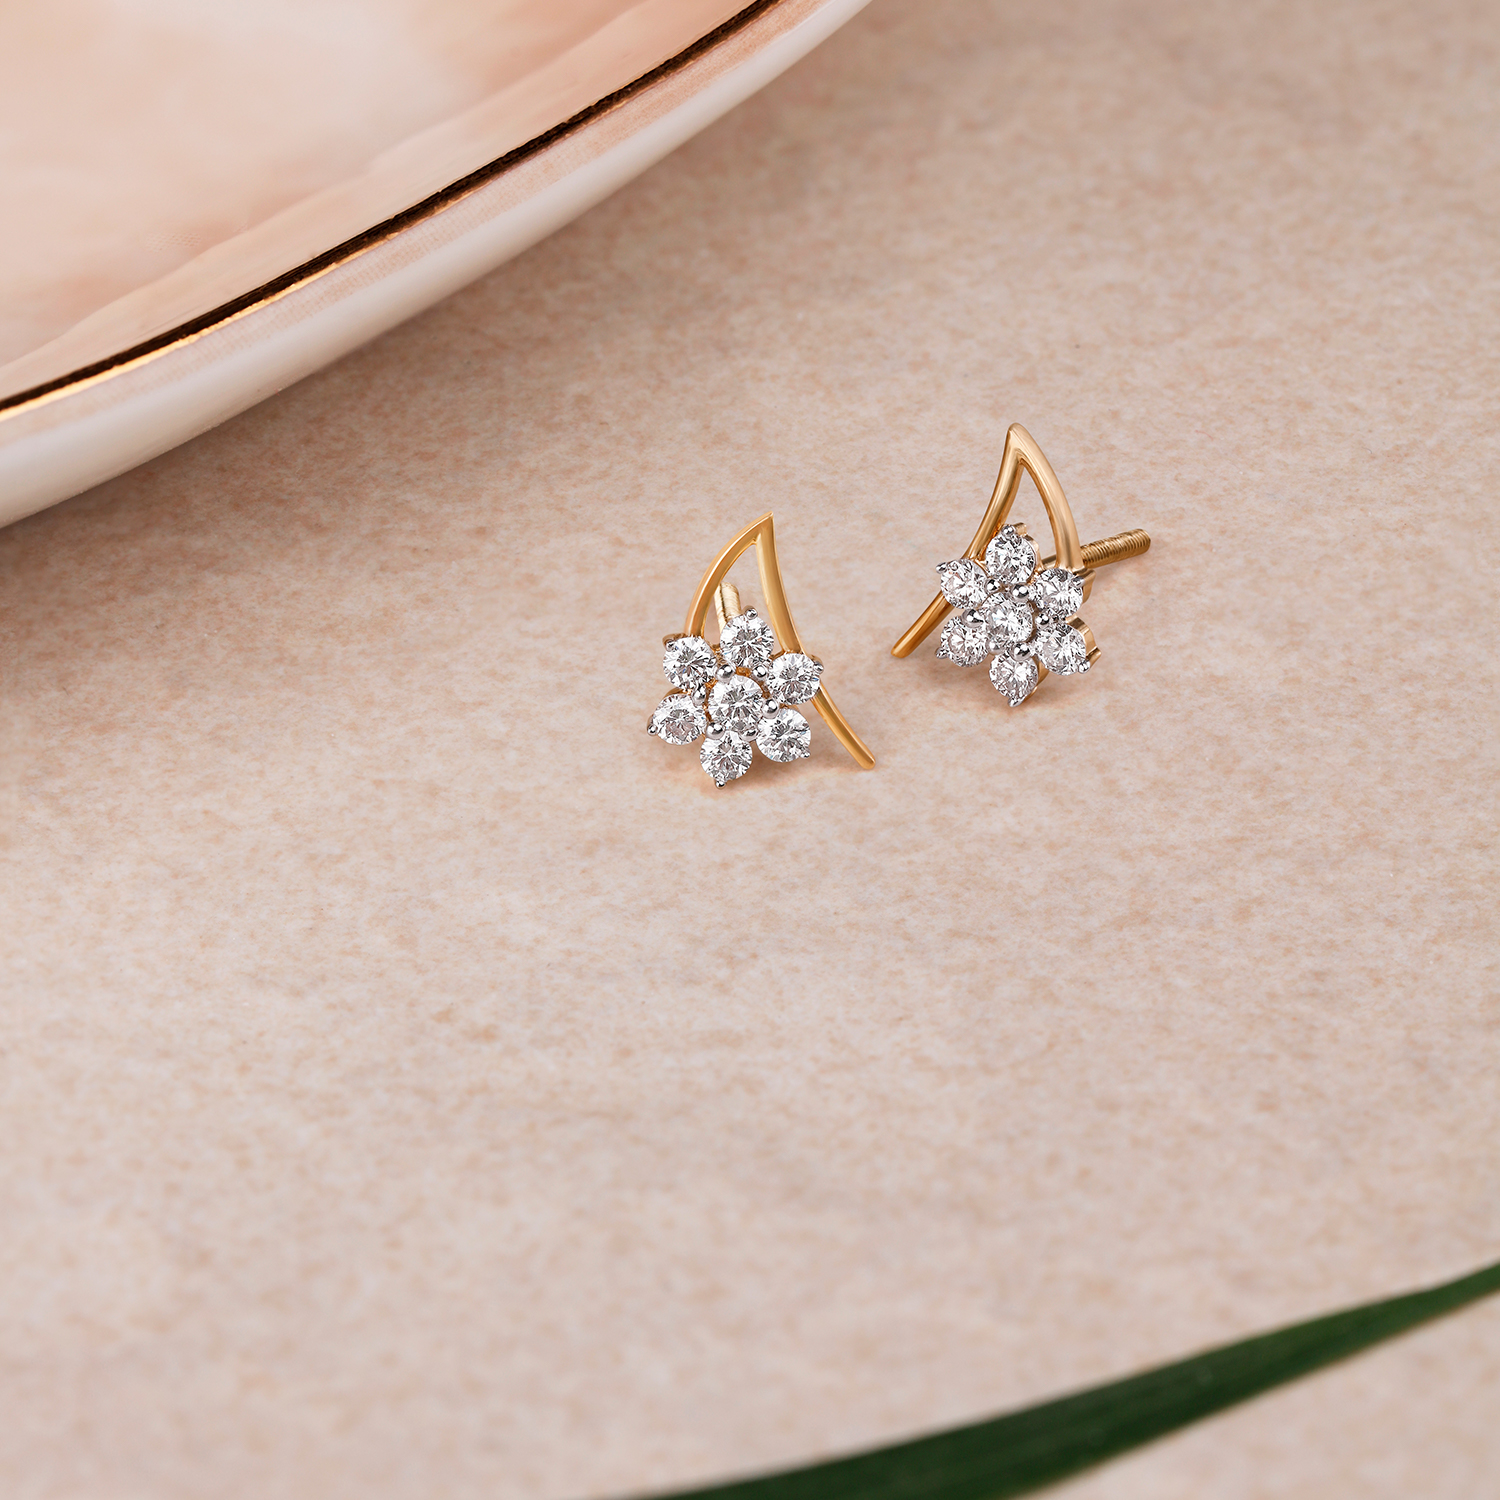 Buy 052 Carat 7 Stone Flower Shaped Diamond Cluster Stud Earrings Online  in India  Etsy